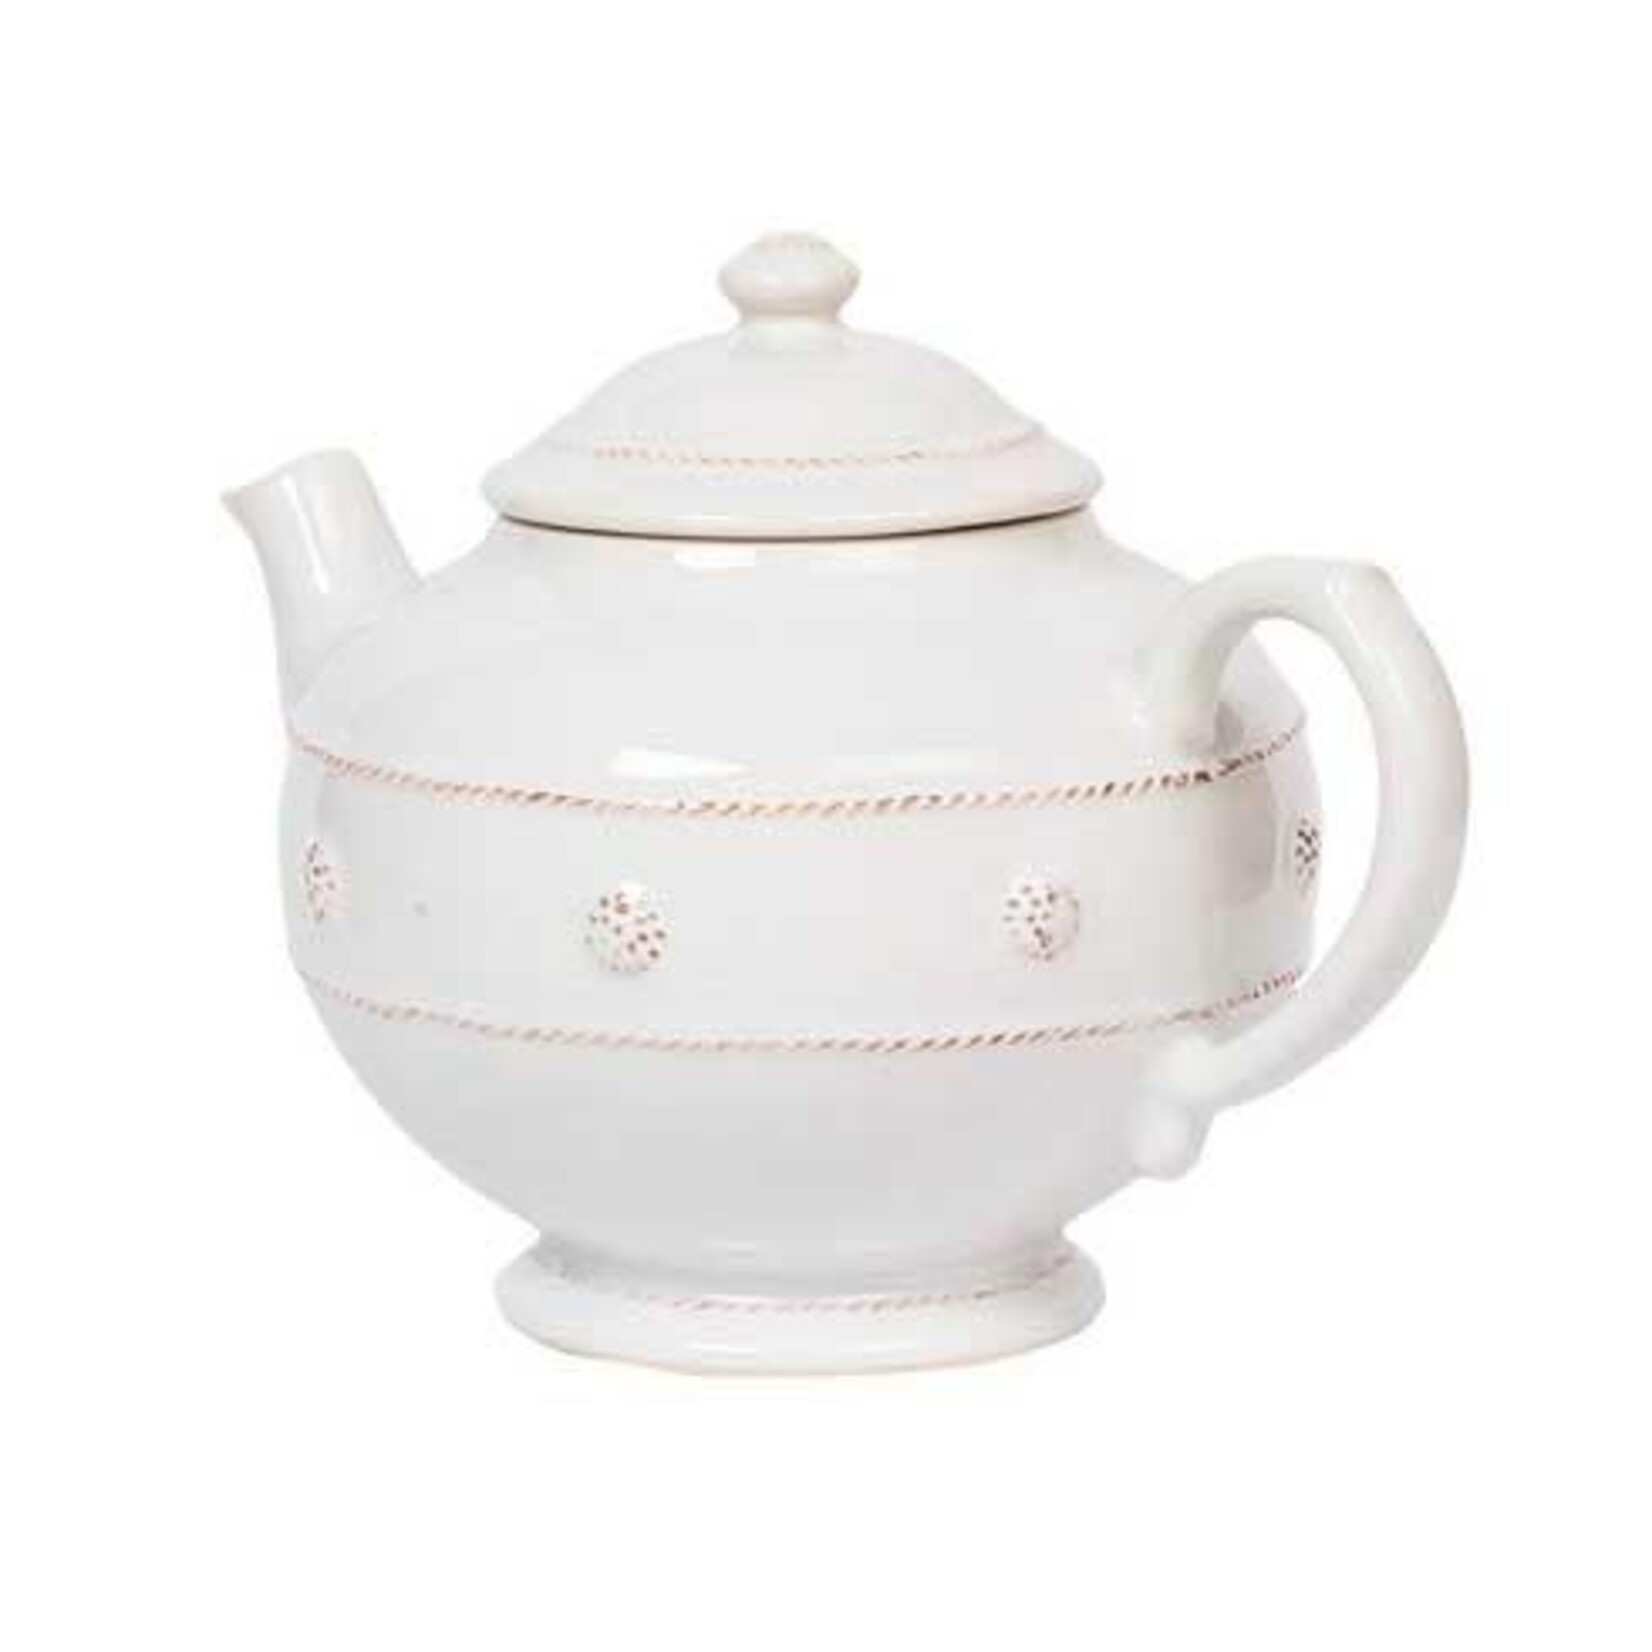 Juliska Berry & Thread Teapot - Whitewash